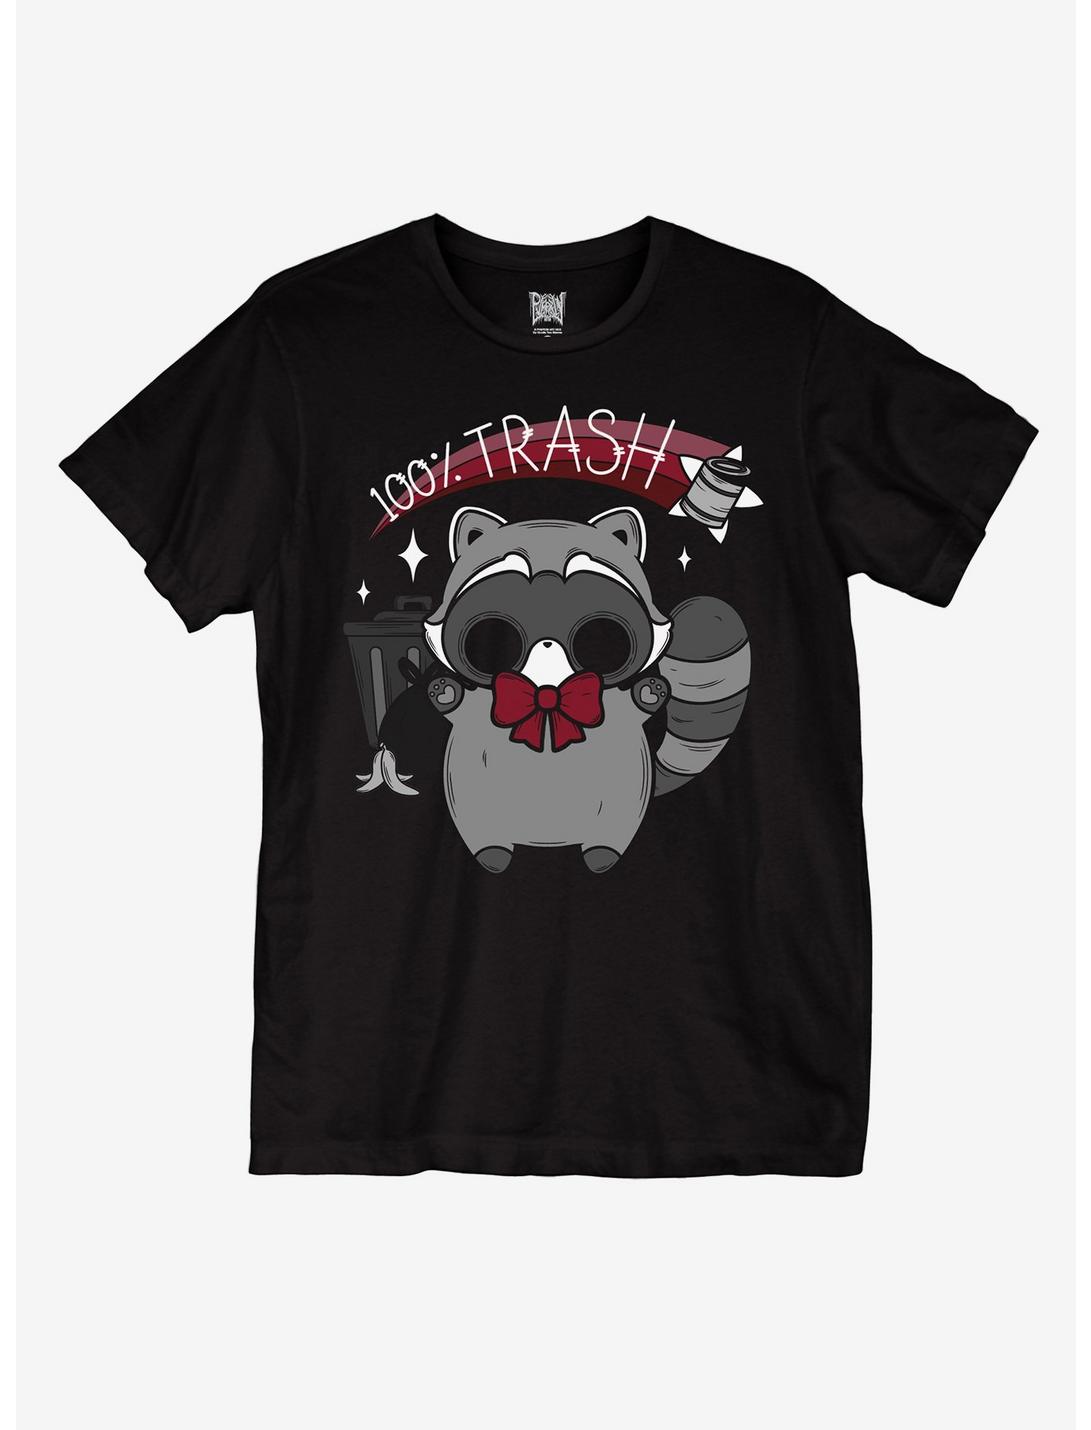 100% Trash Raccoon Boyfriend Fit Girls T-Shirt By Pvmpkin, MULTI, hi-res